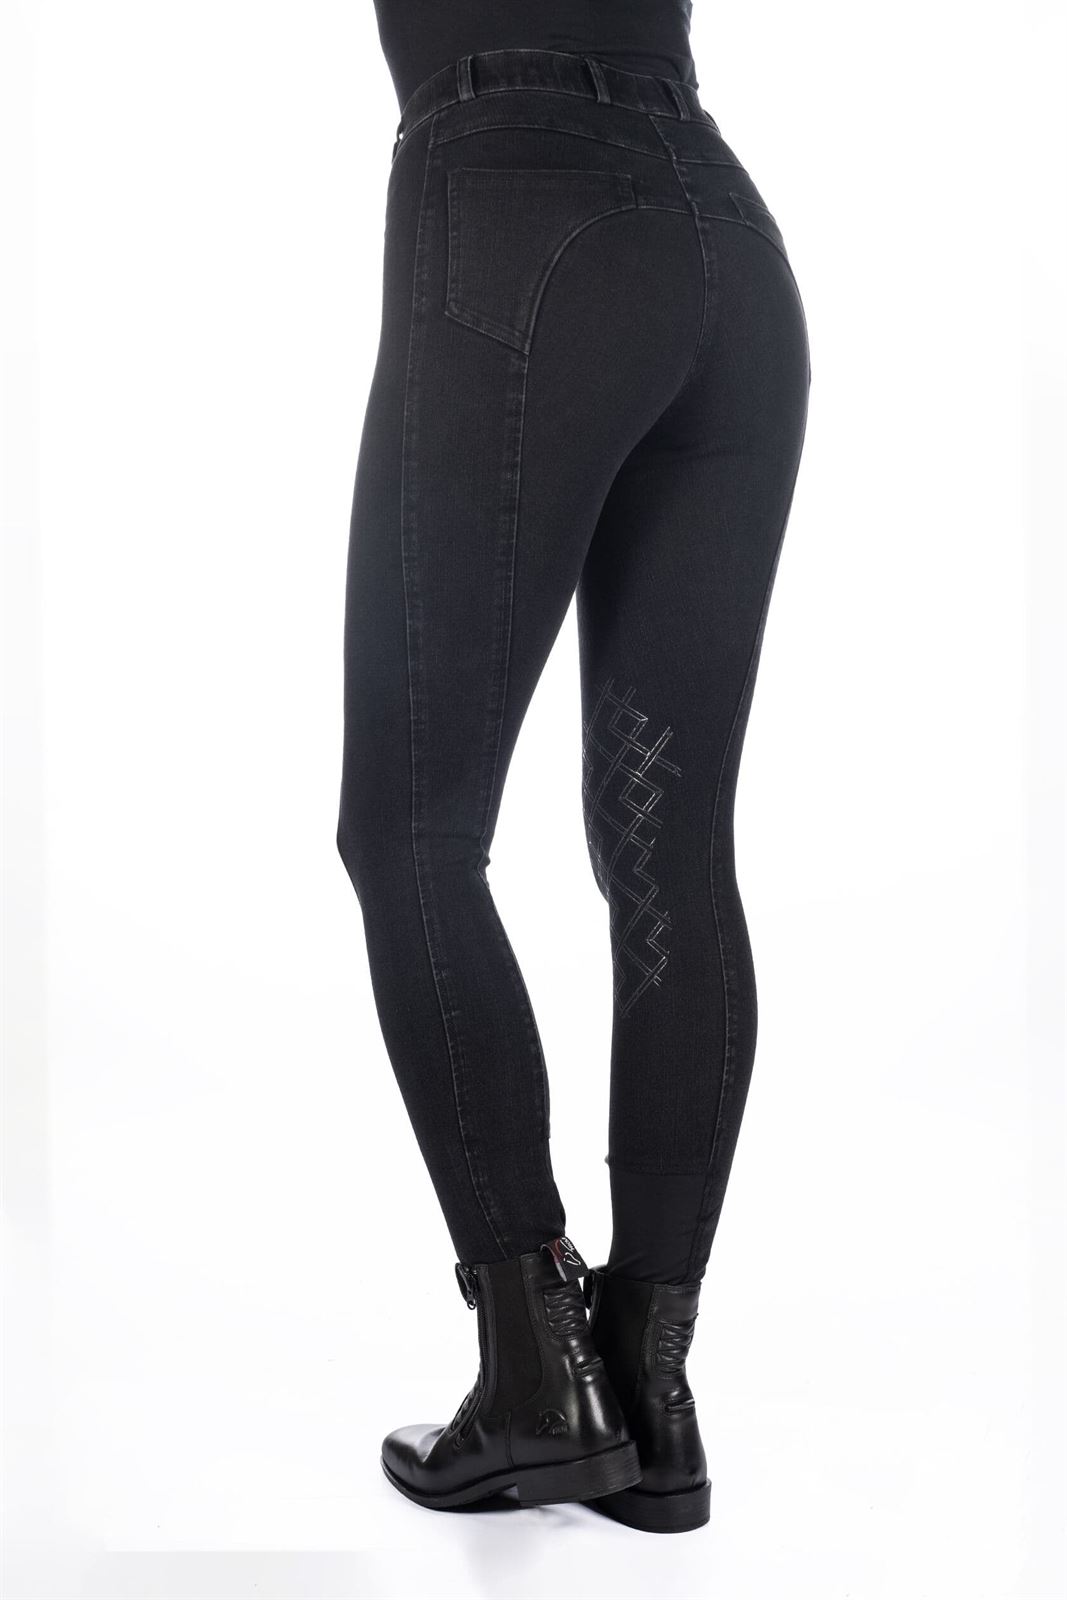 Pantalón mujer HKM Sports Equipment DENIM (vaquero) color negro rodilla grip - Imagen 4